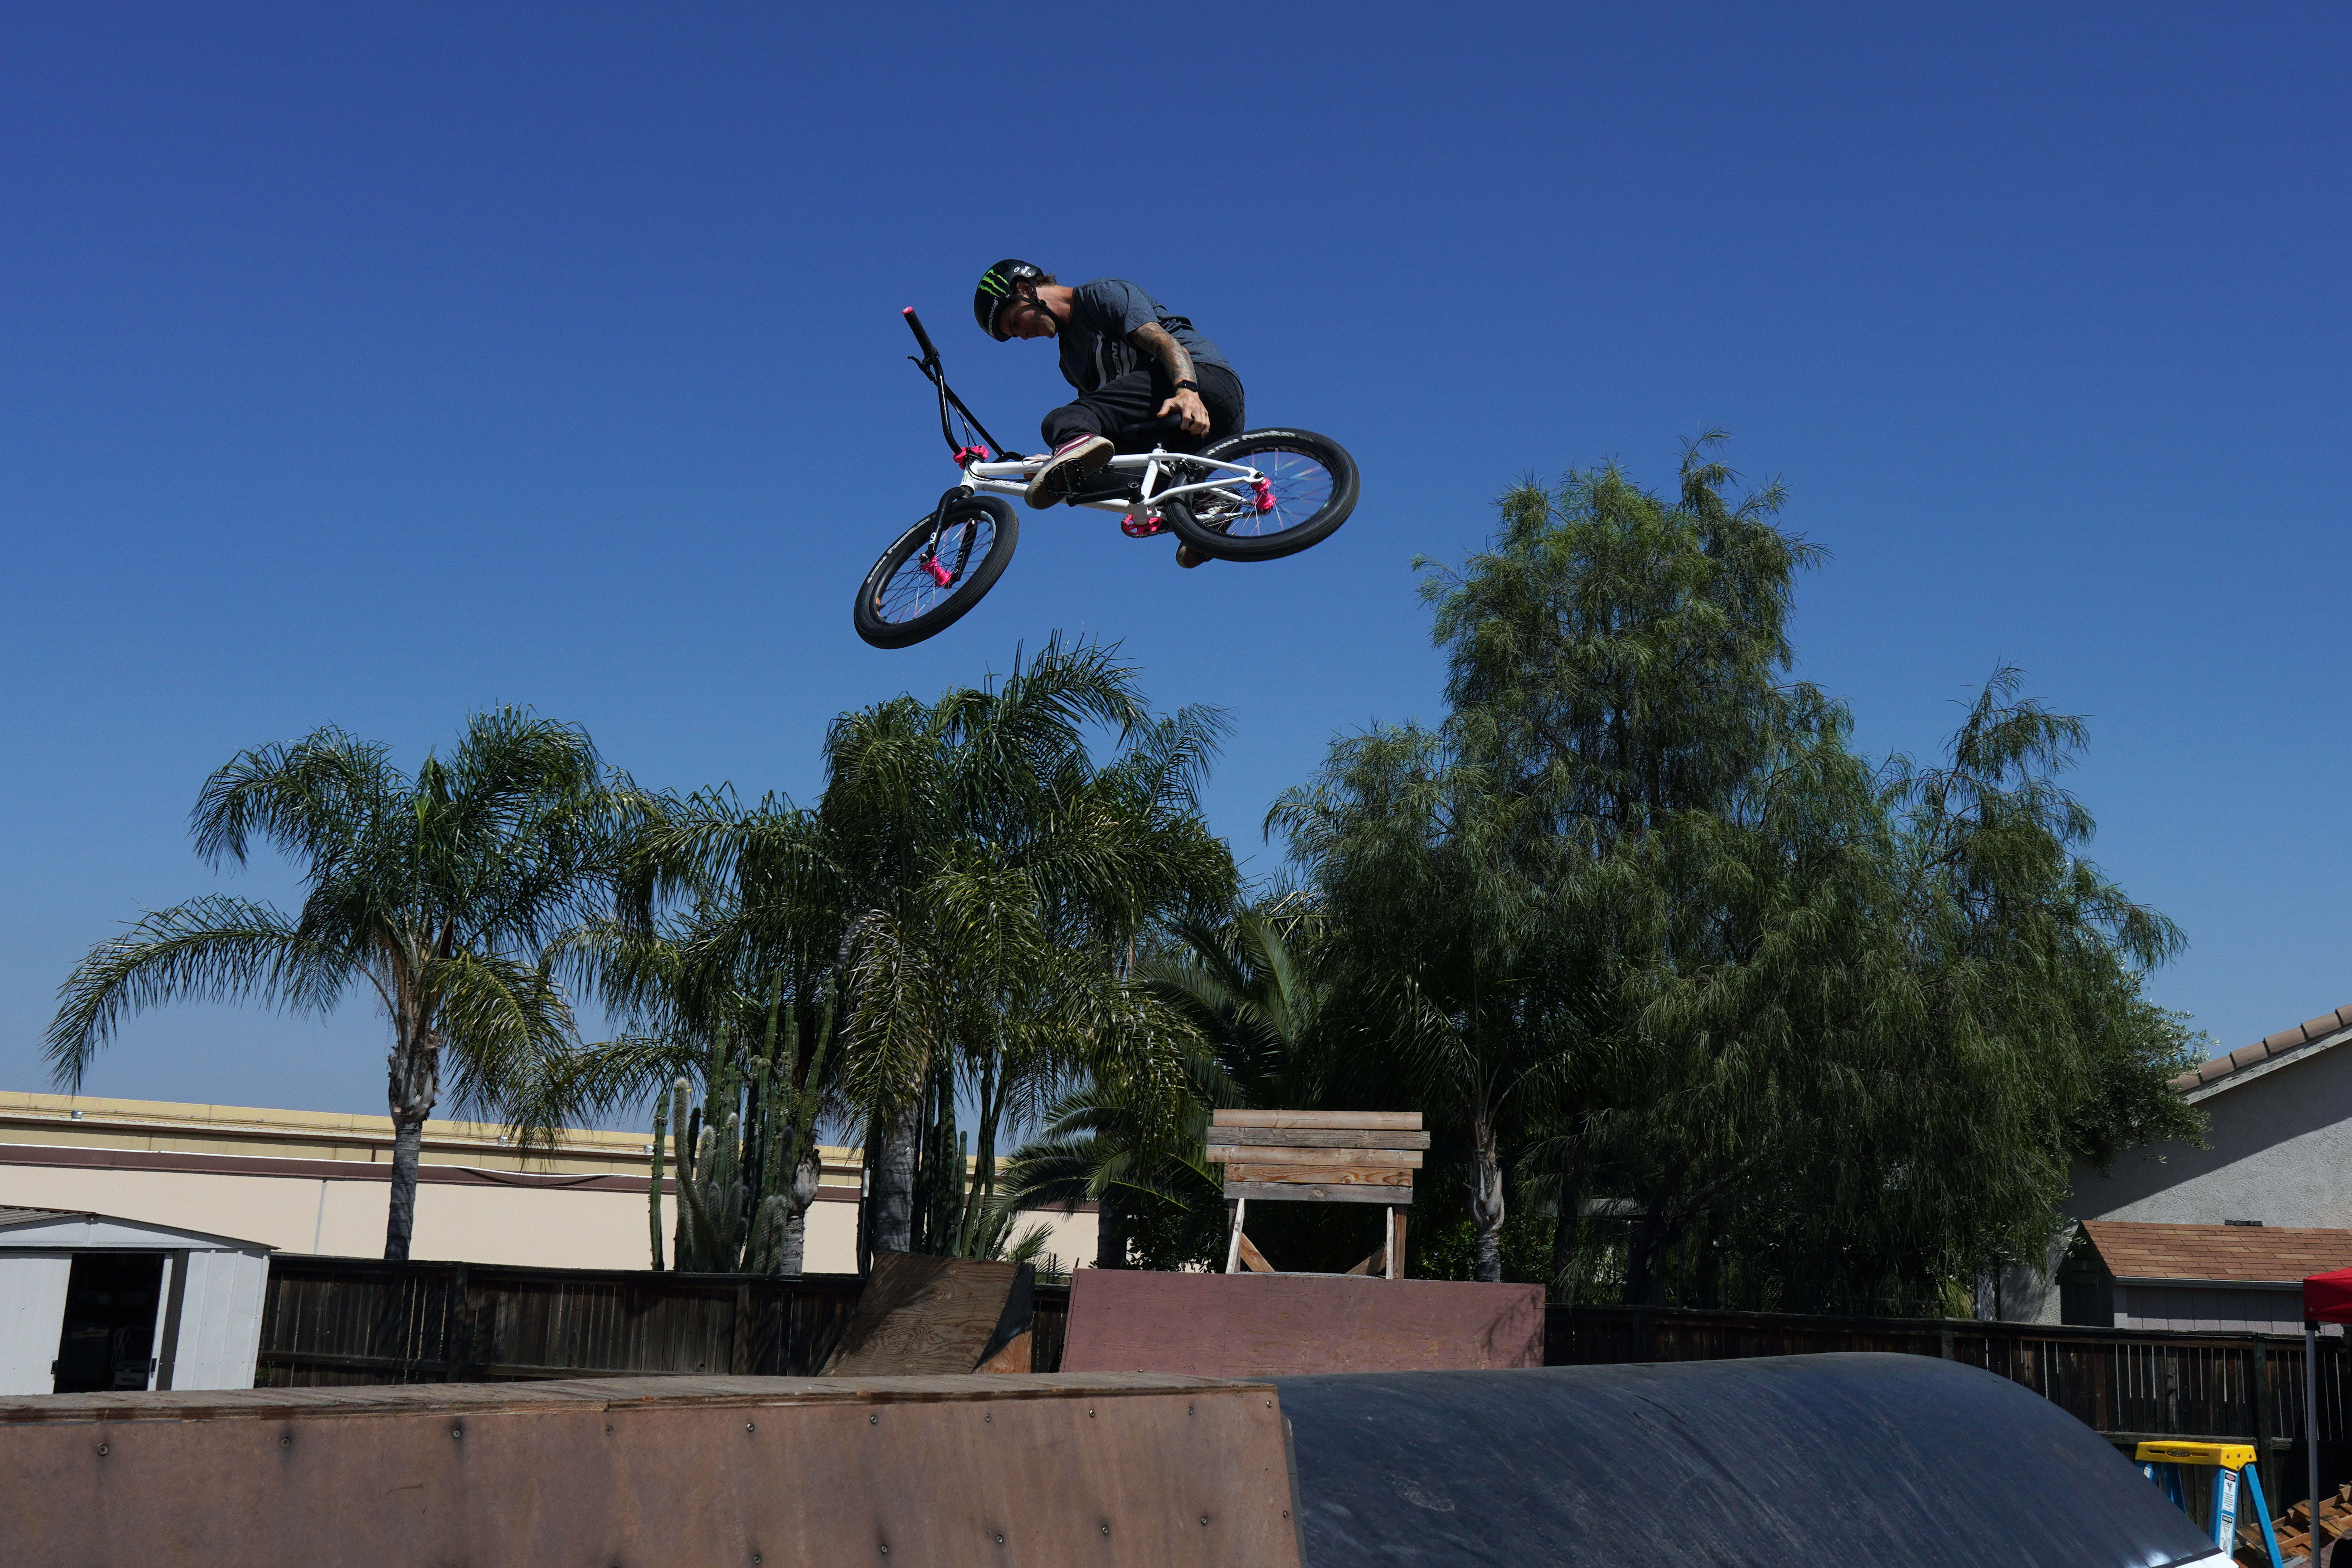 Andy Buckworth flying high over a jump